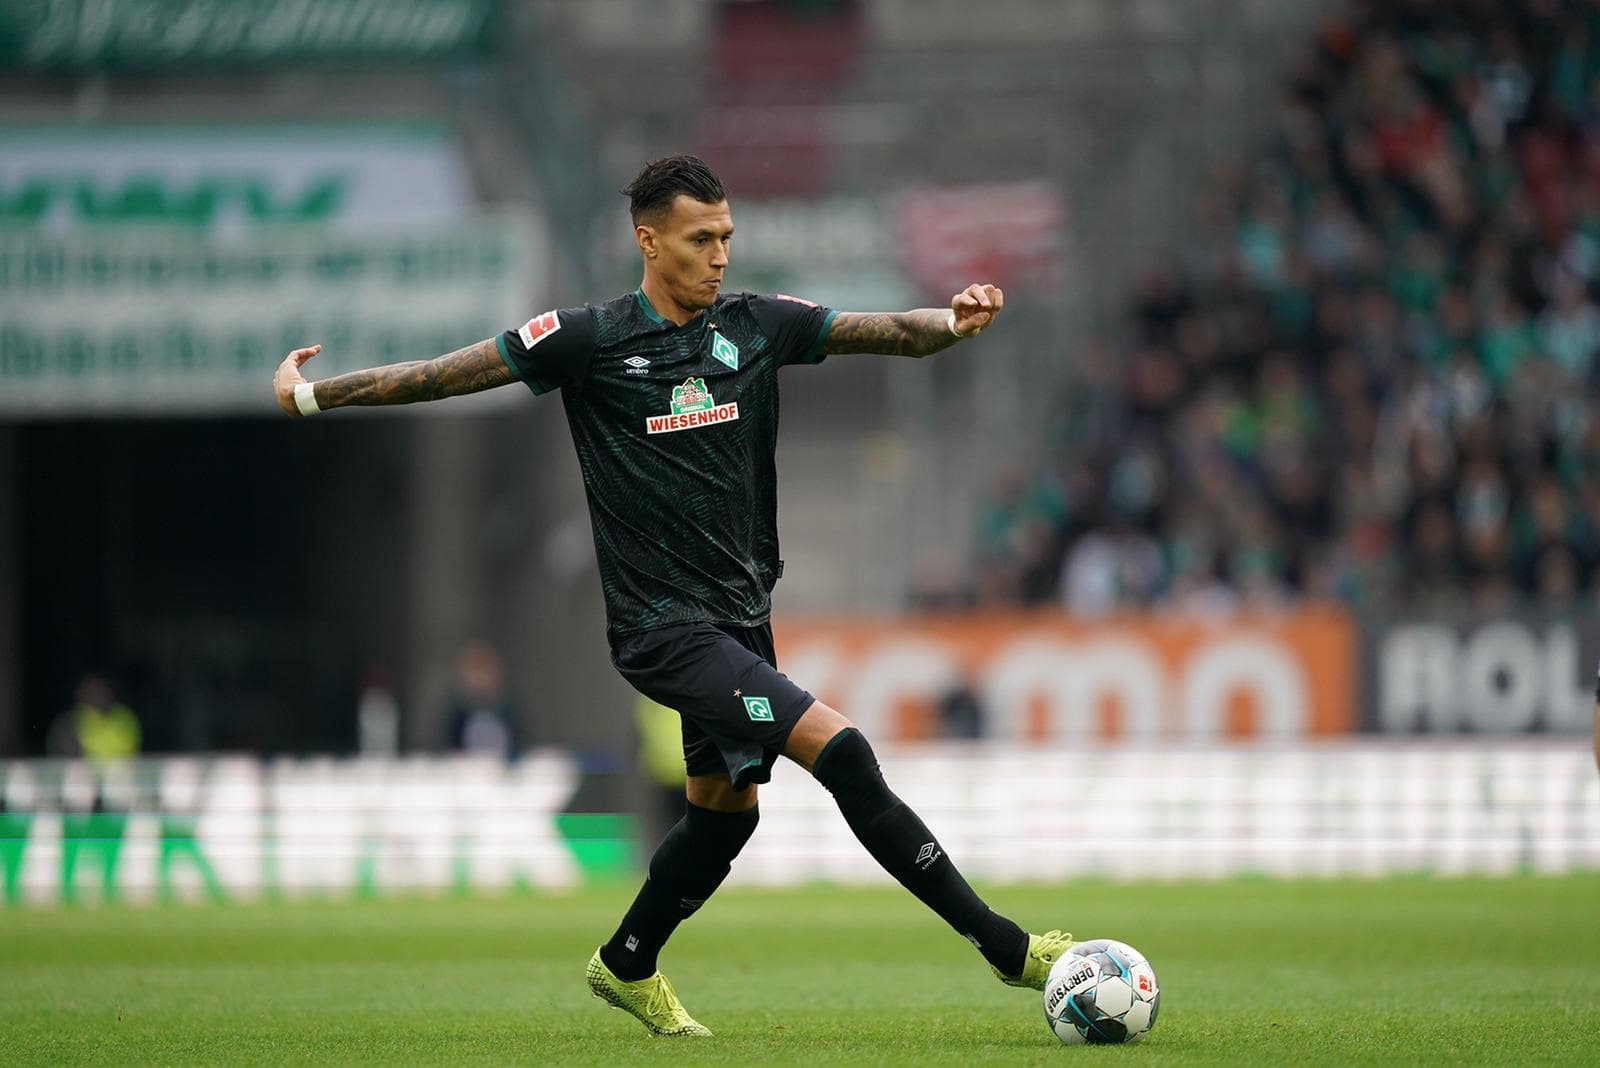 Werder Bremen vs Dortmund Betting Odds and Predictions